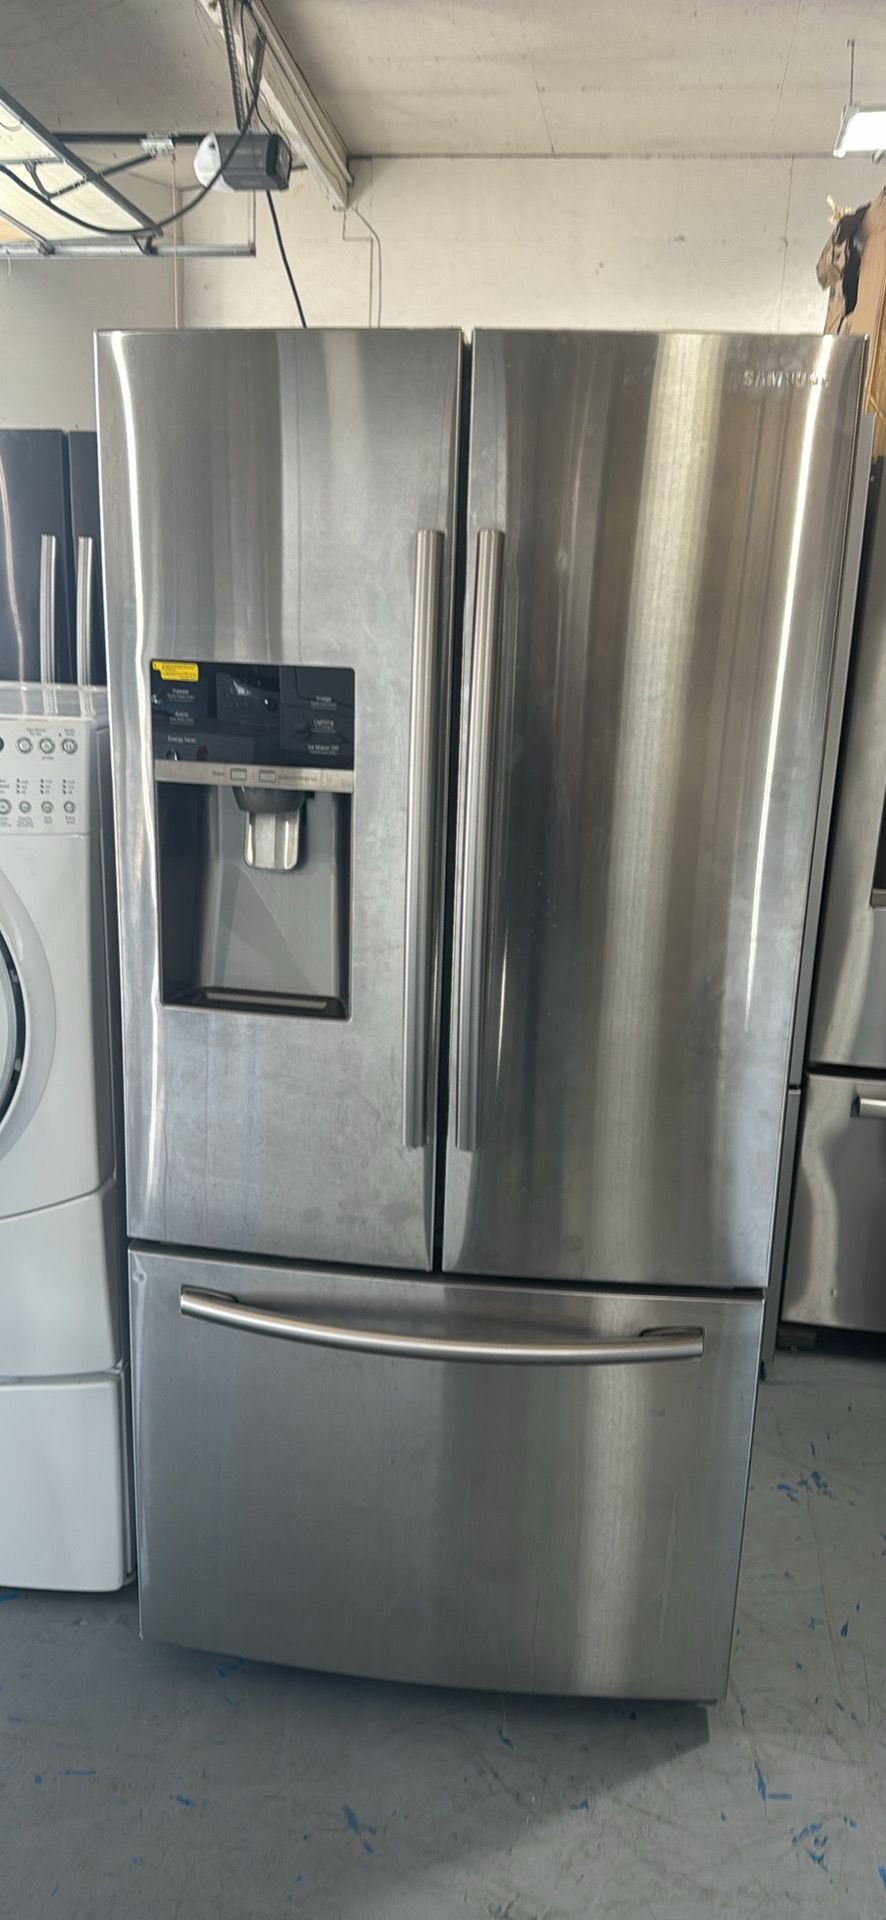 Samsung 33″ Like New French Door Refrigerator